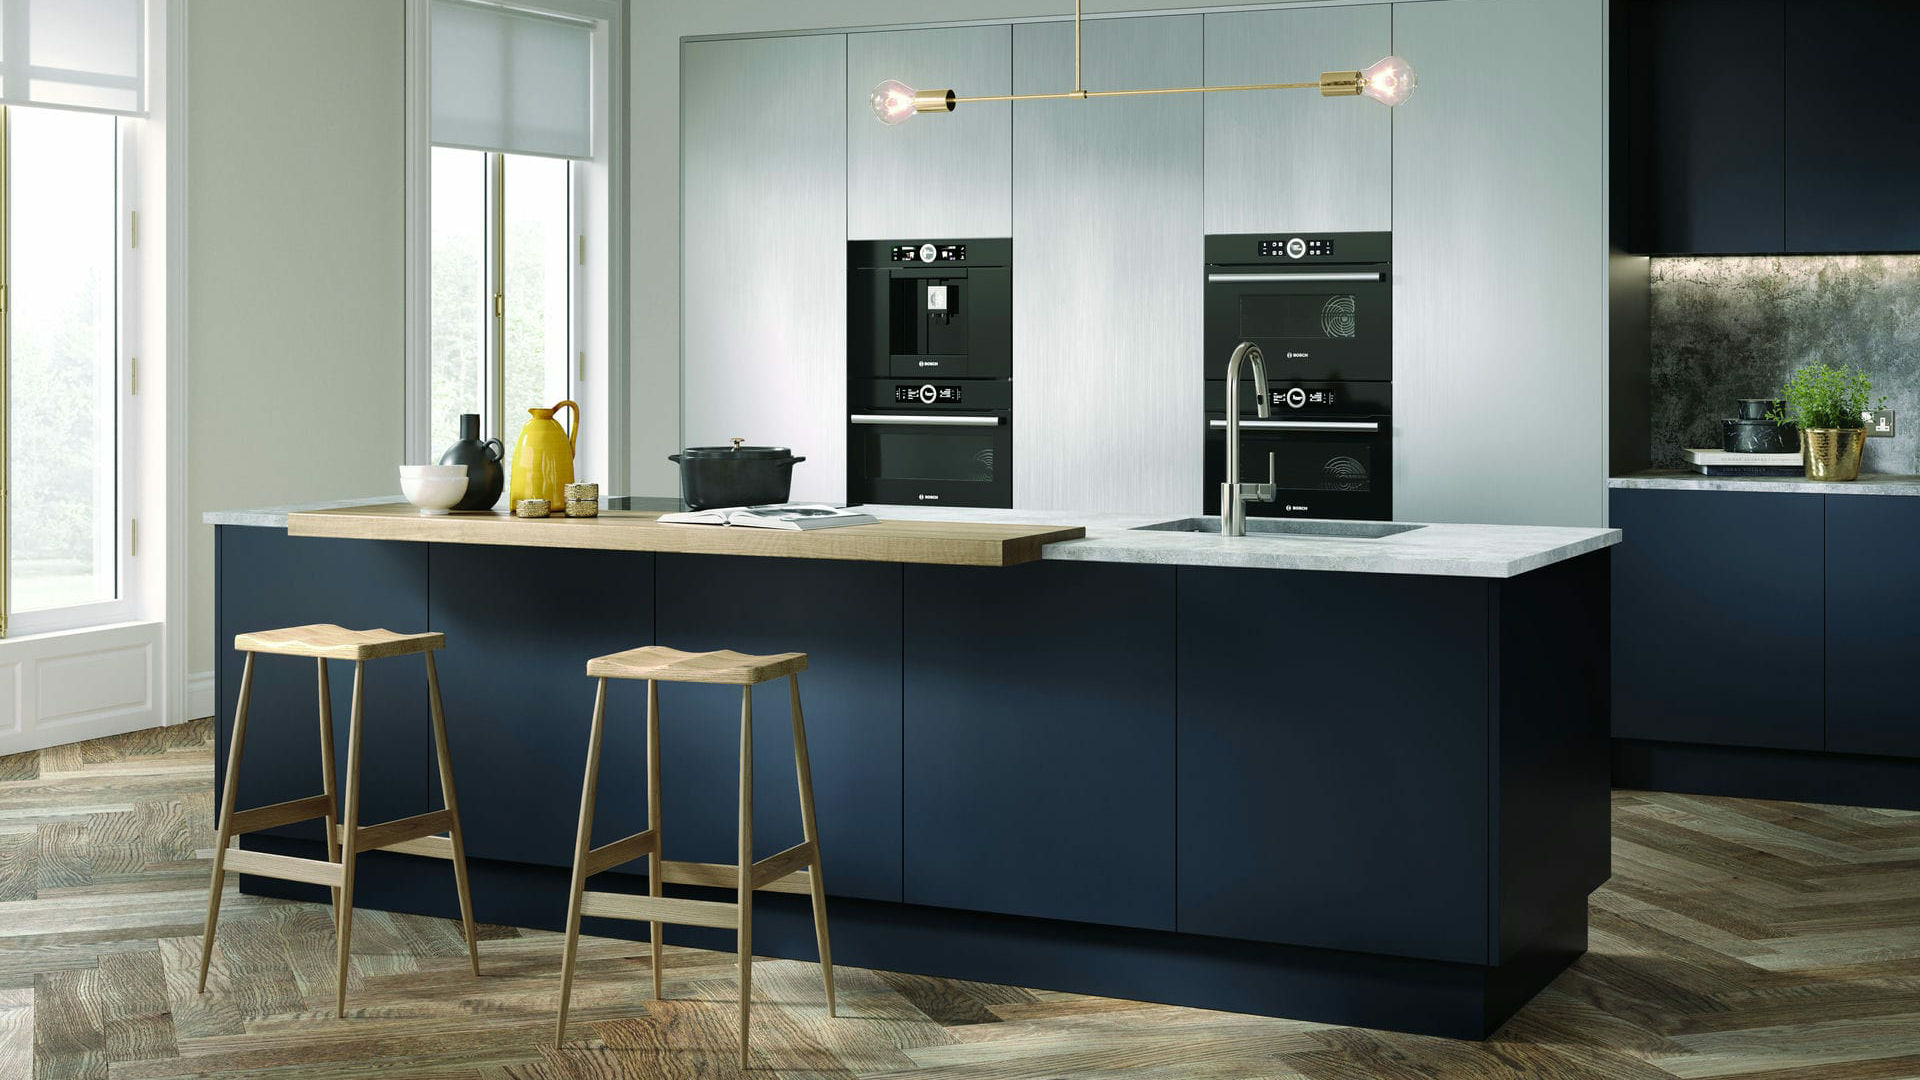 Matt Acrylic Indigo Blue kitchens showcasing a sophisticated matte finish in a rich indigo shade